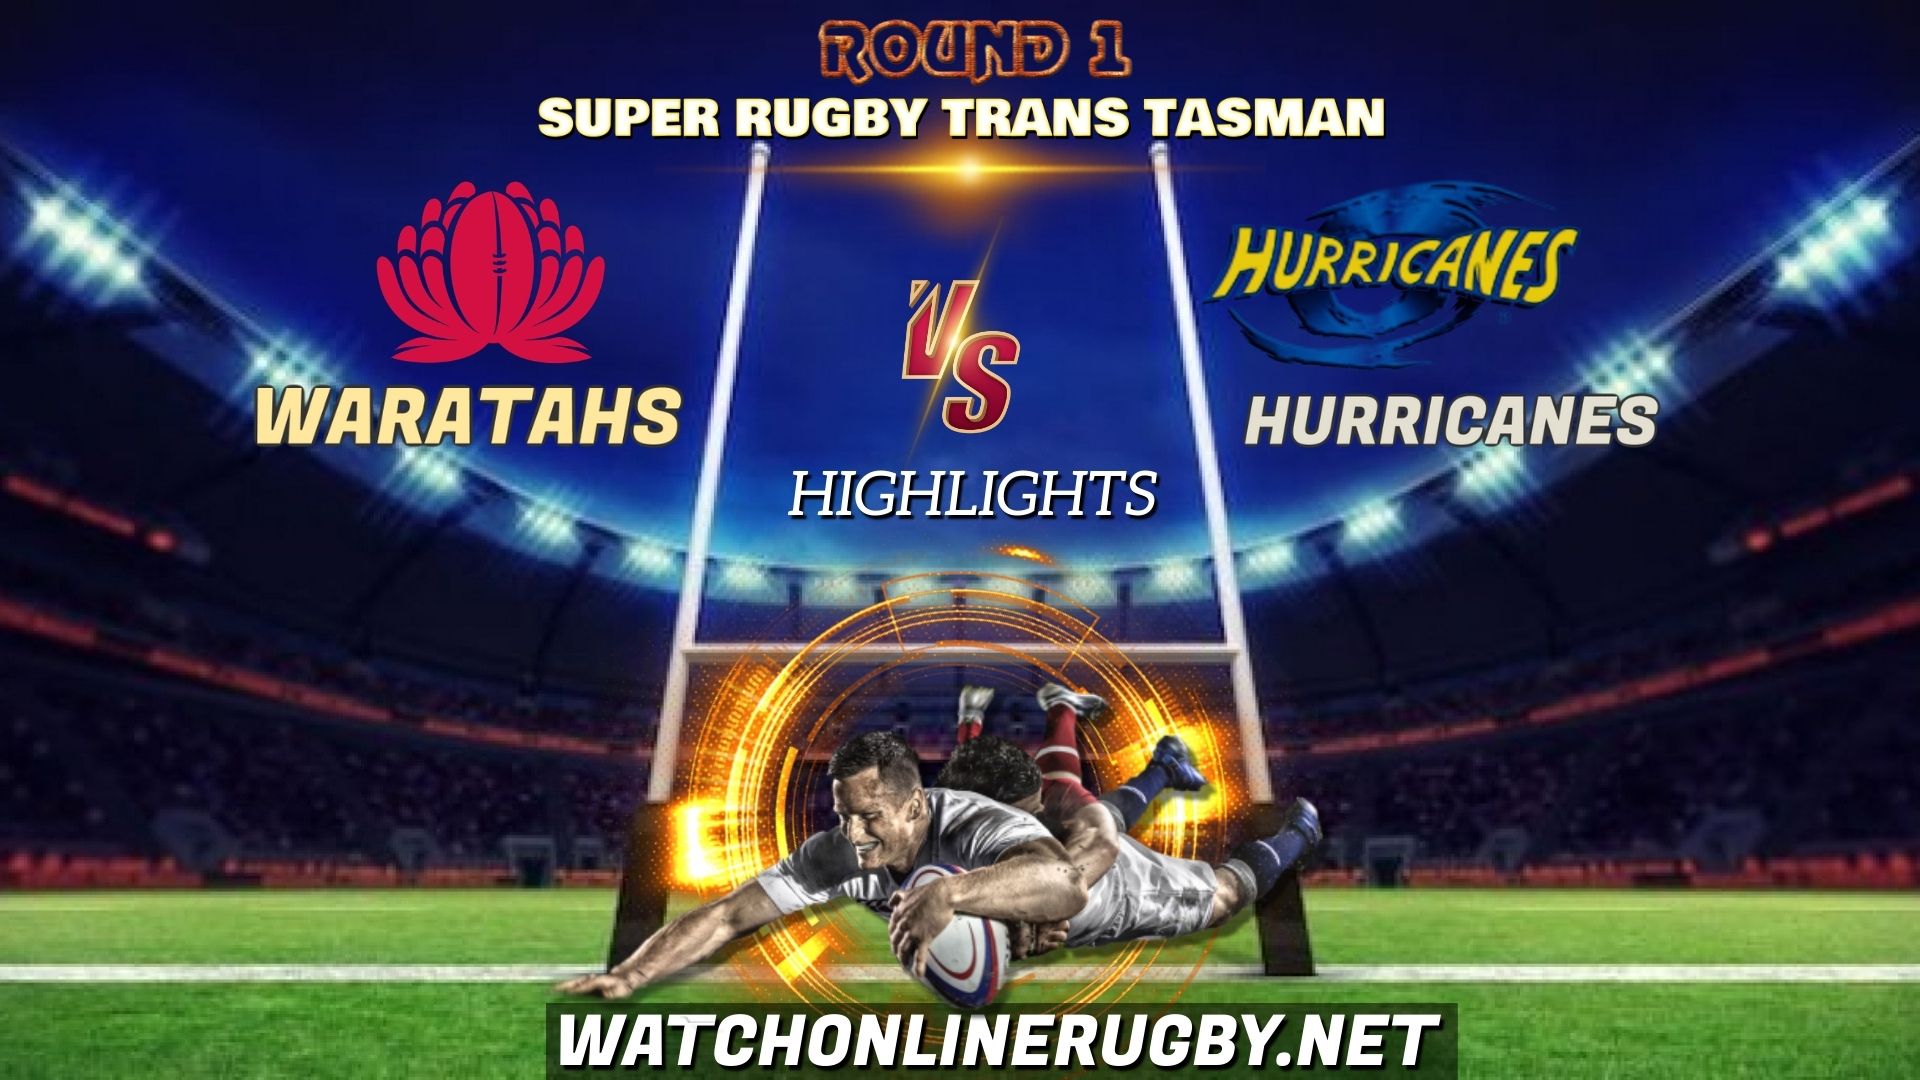 Waratahs Vs Hurricanes Super Rugby Trans Tasman 2021 RD 1